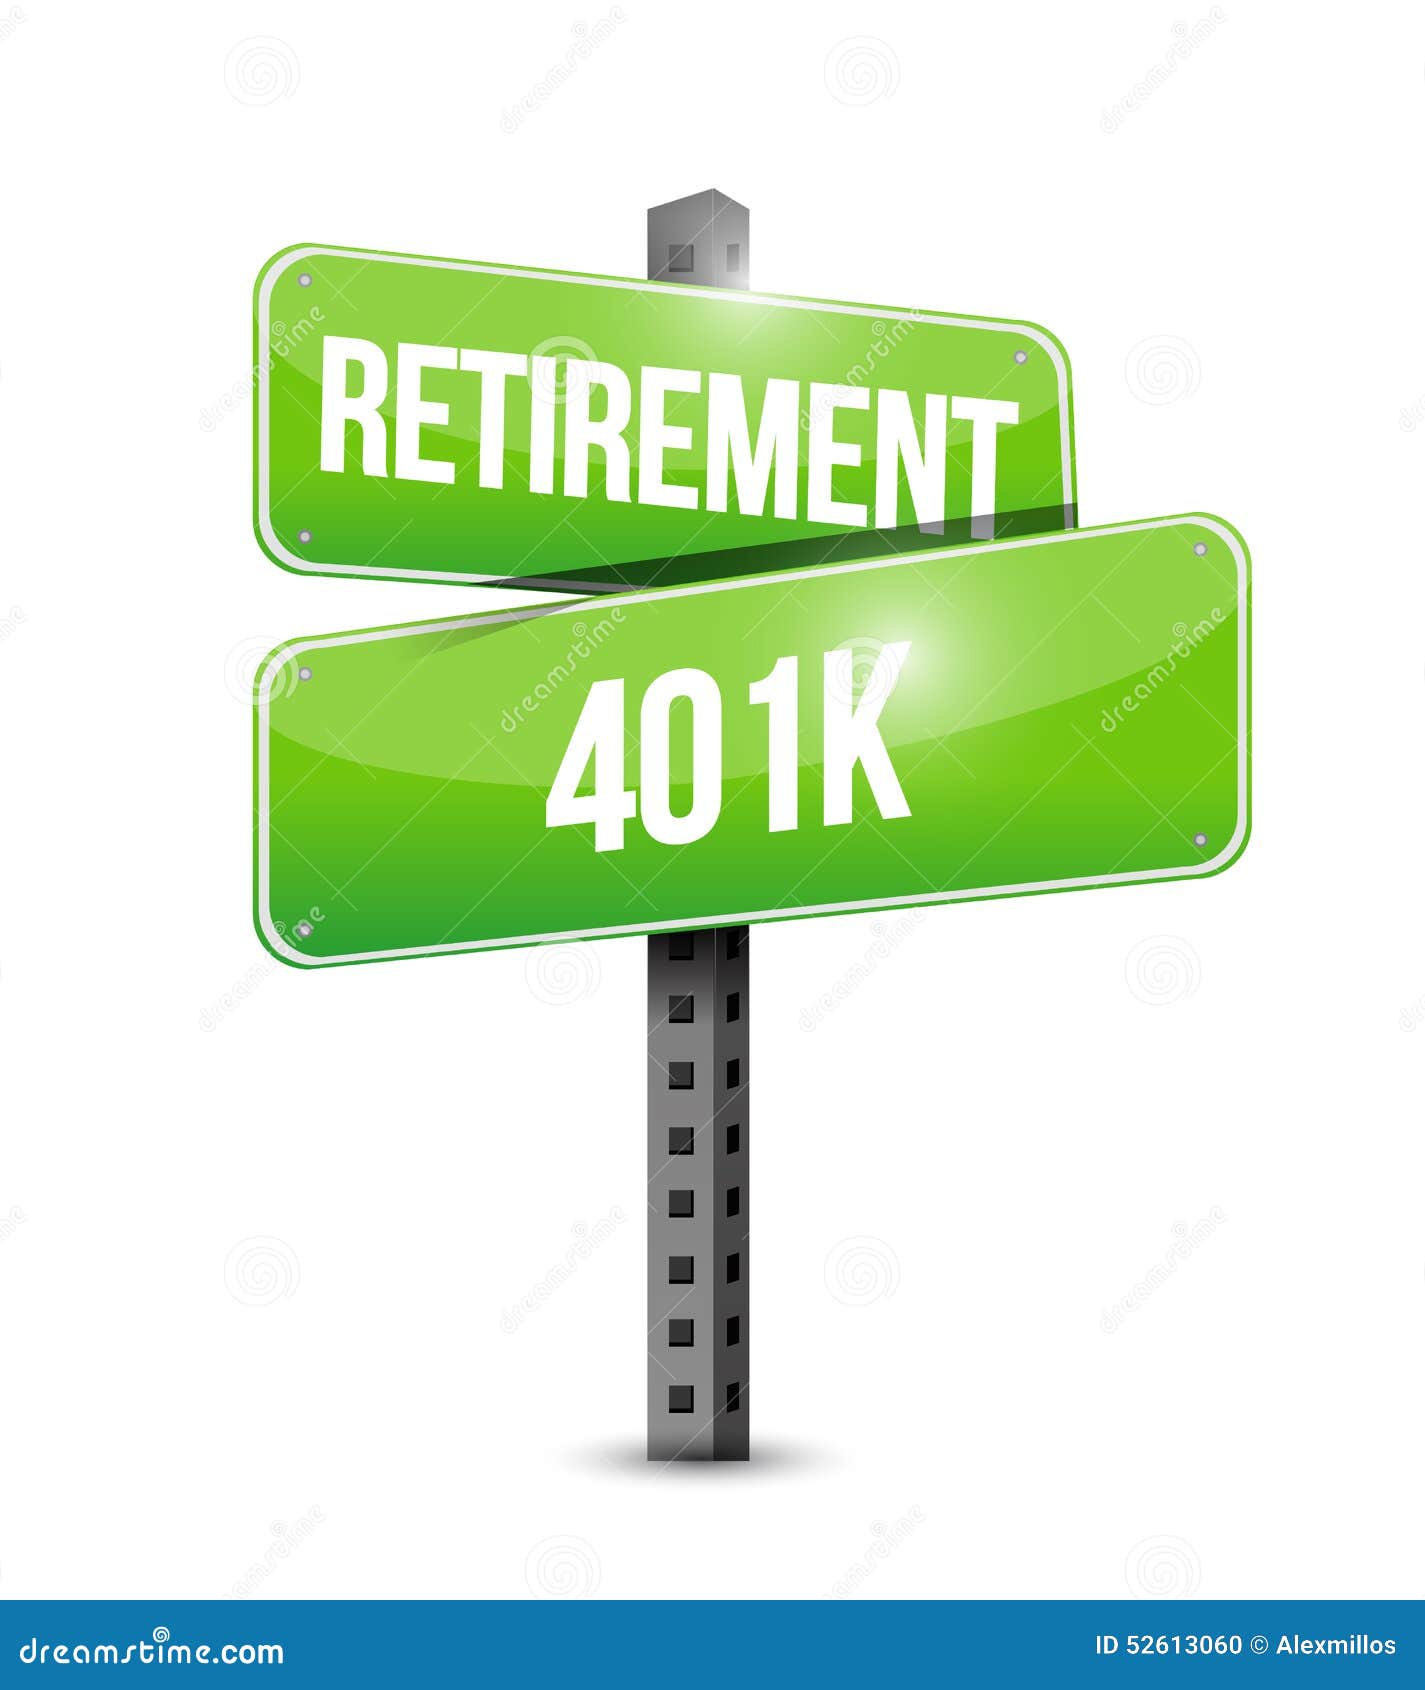 Retirement 401k 